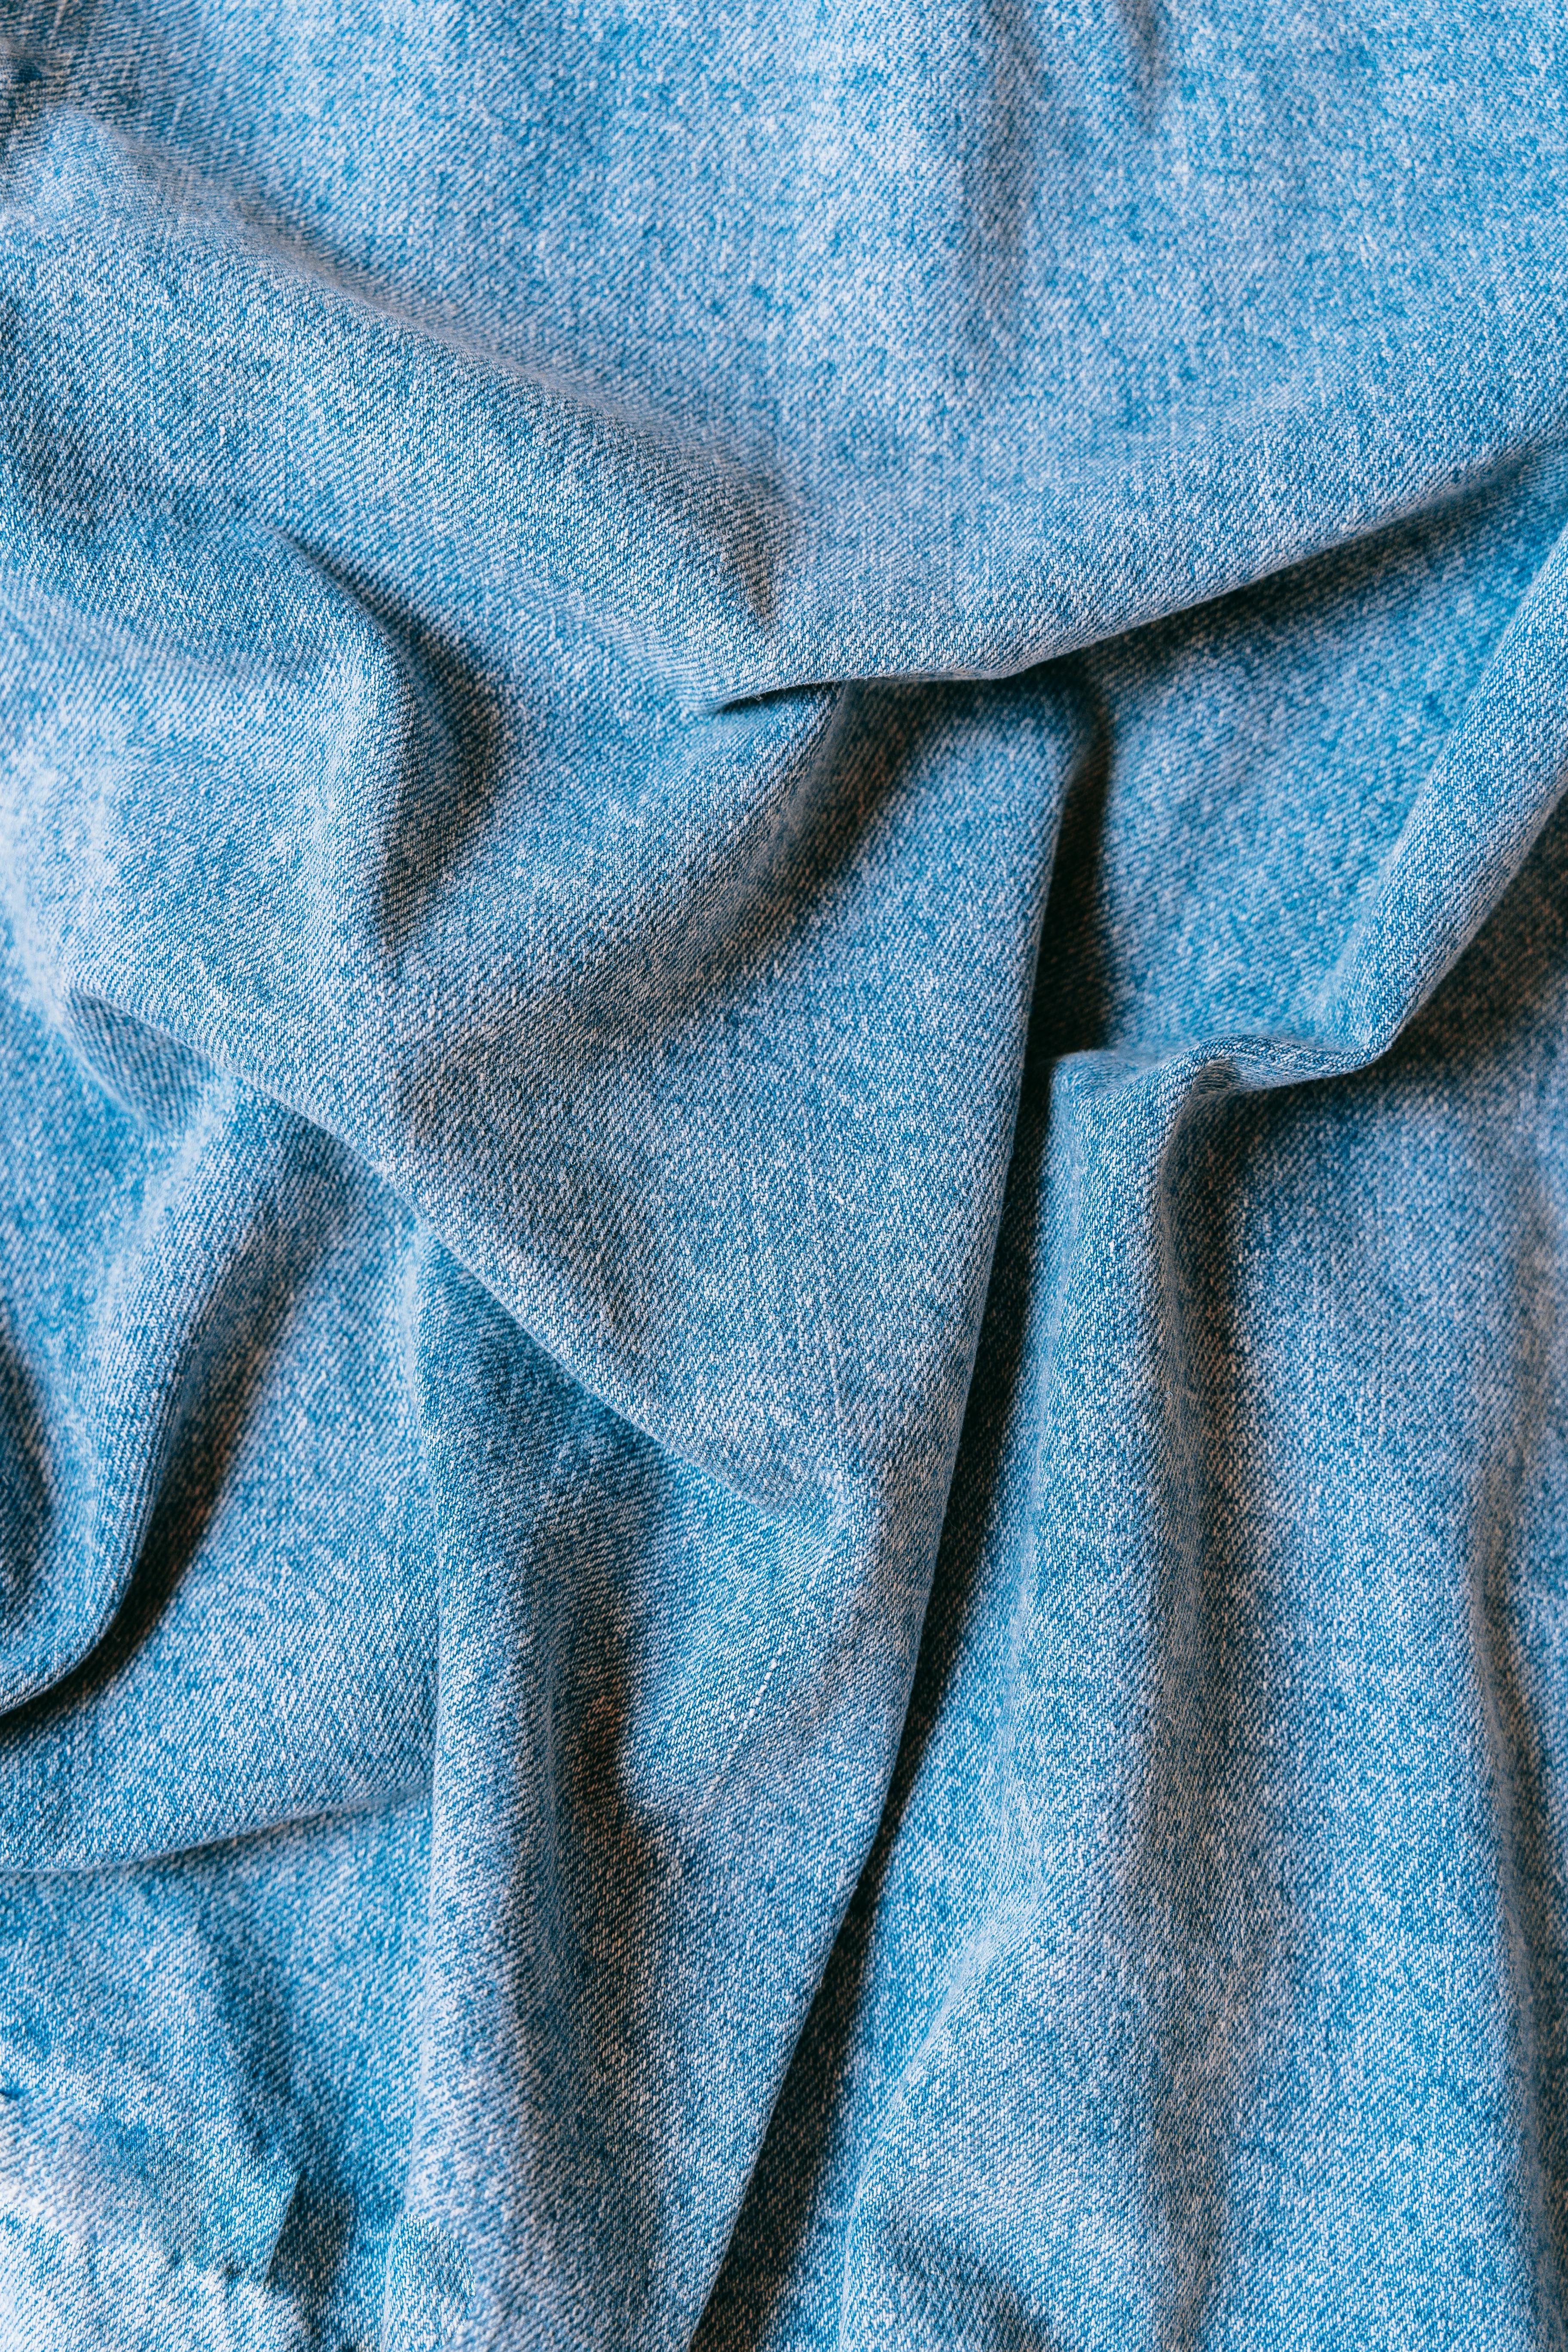 blue denim textile in close photography